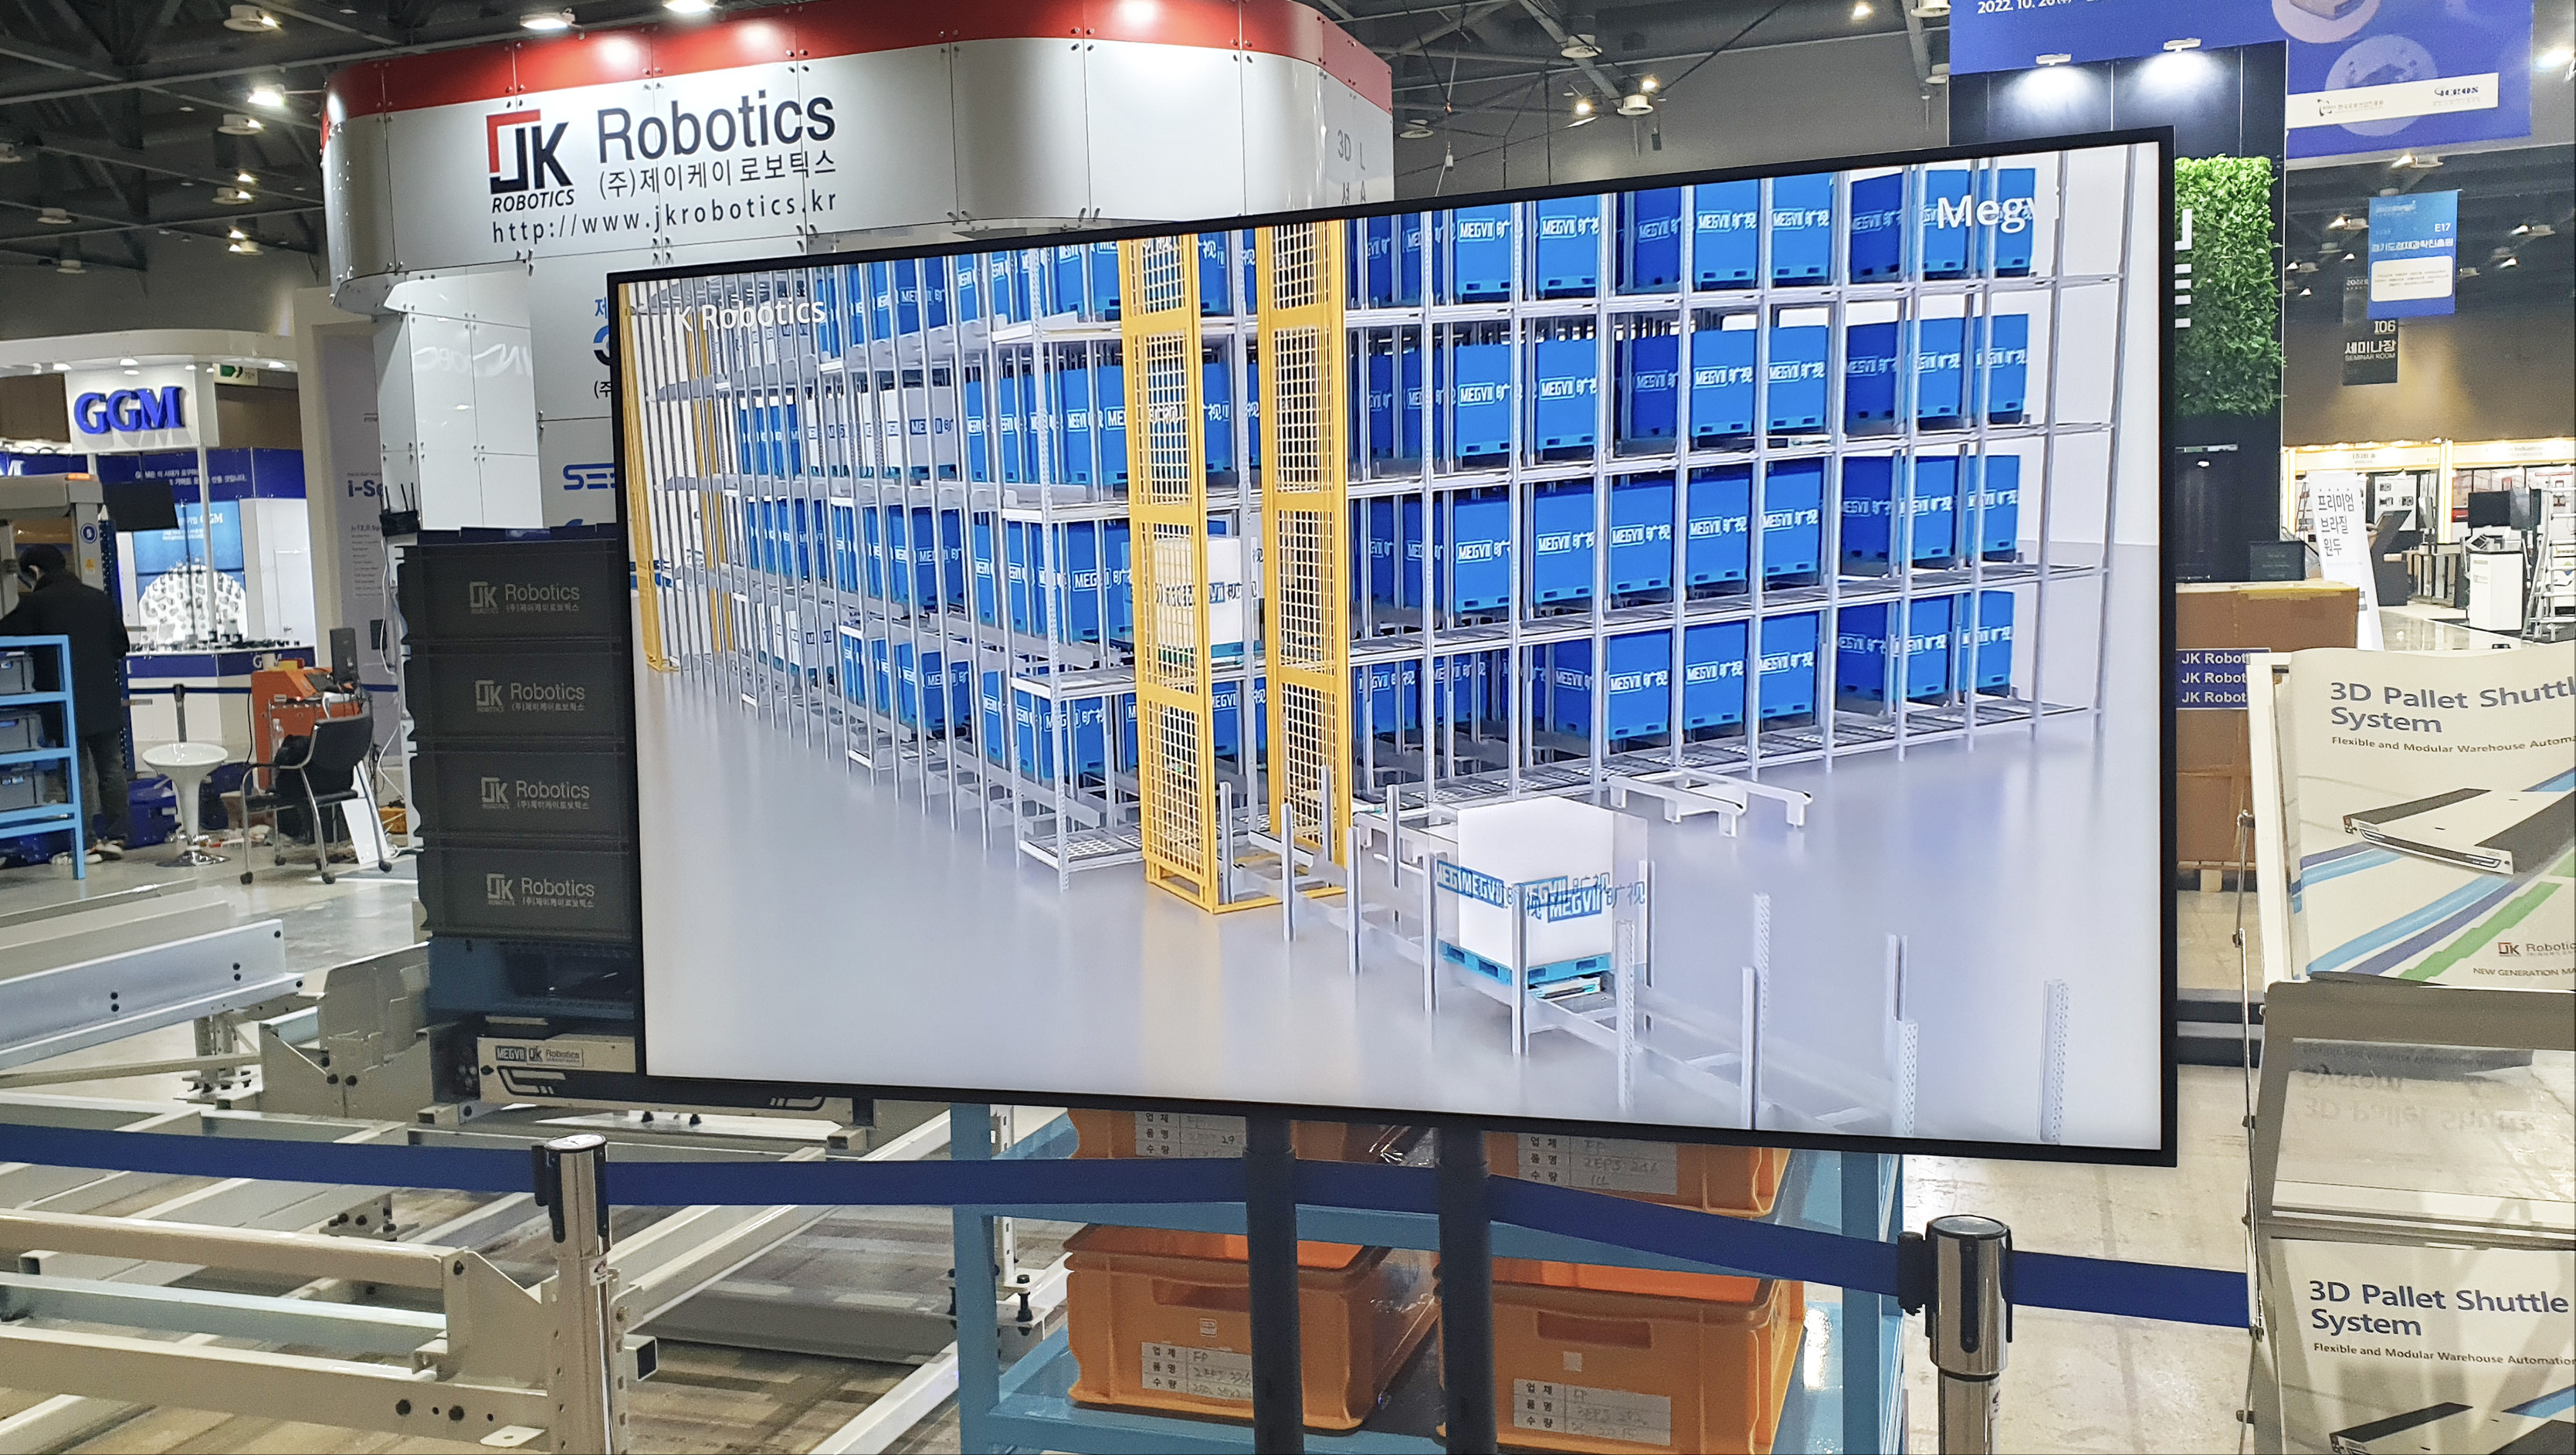 Megvii pallet shuttle pop out in Korea Robot World 2022